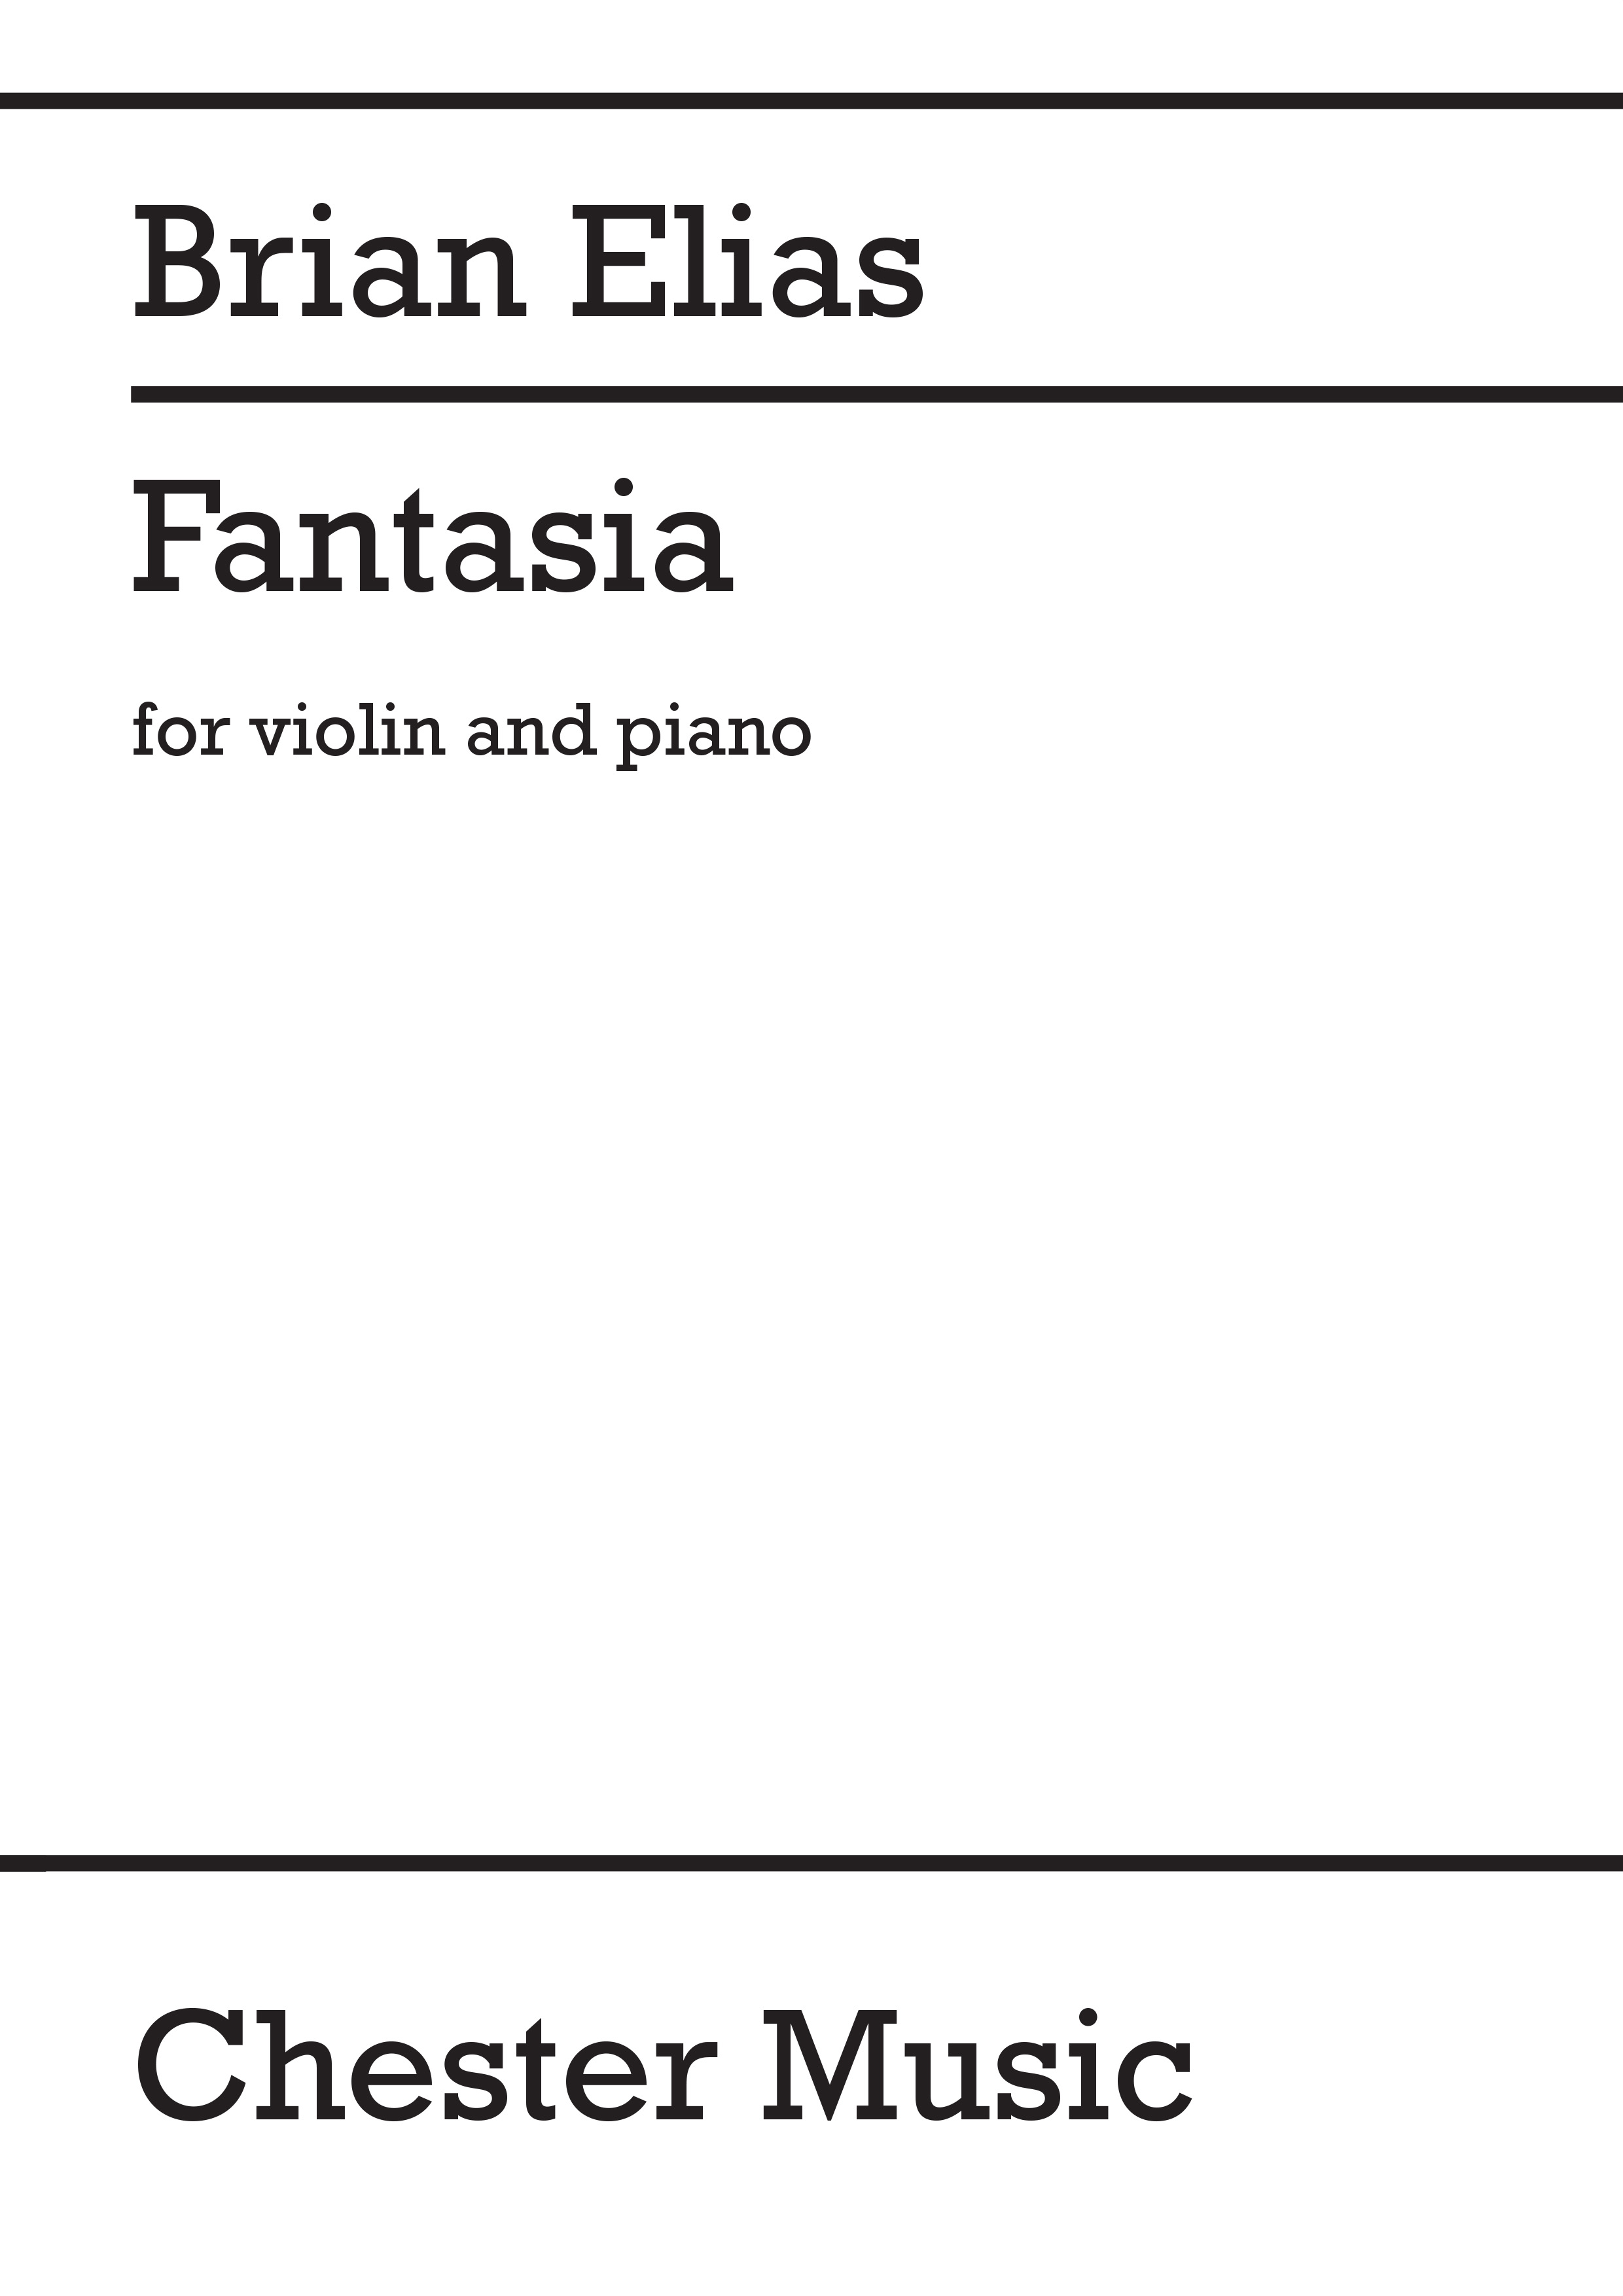 Fantasia (ELIAS BRIAN)